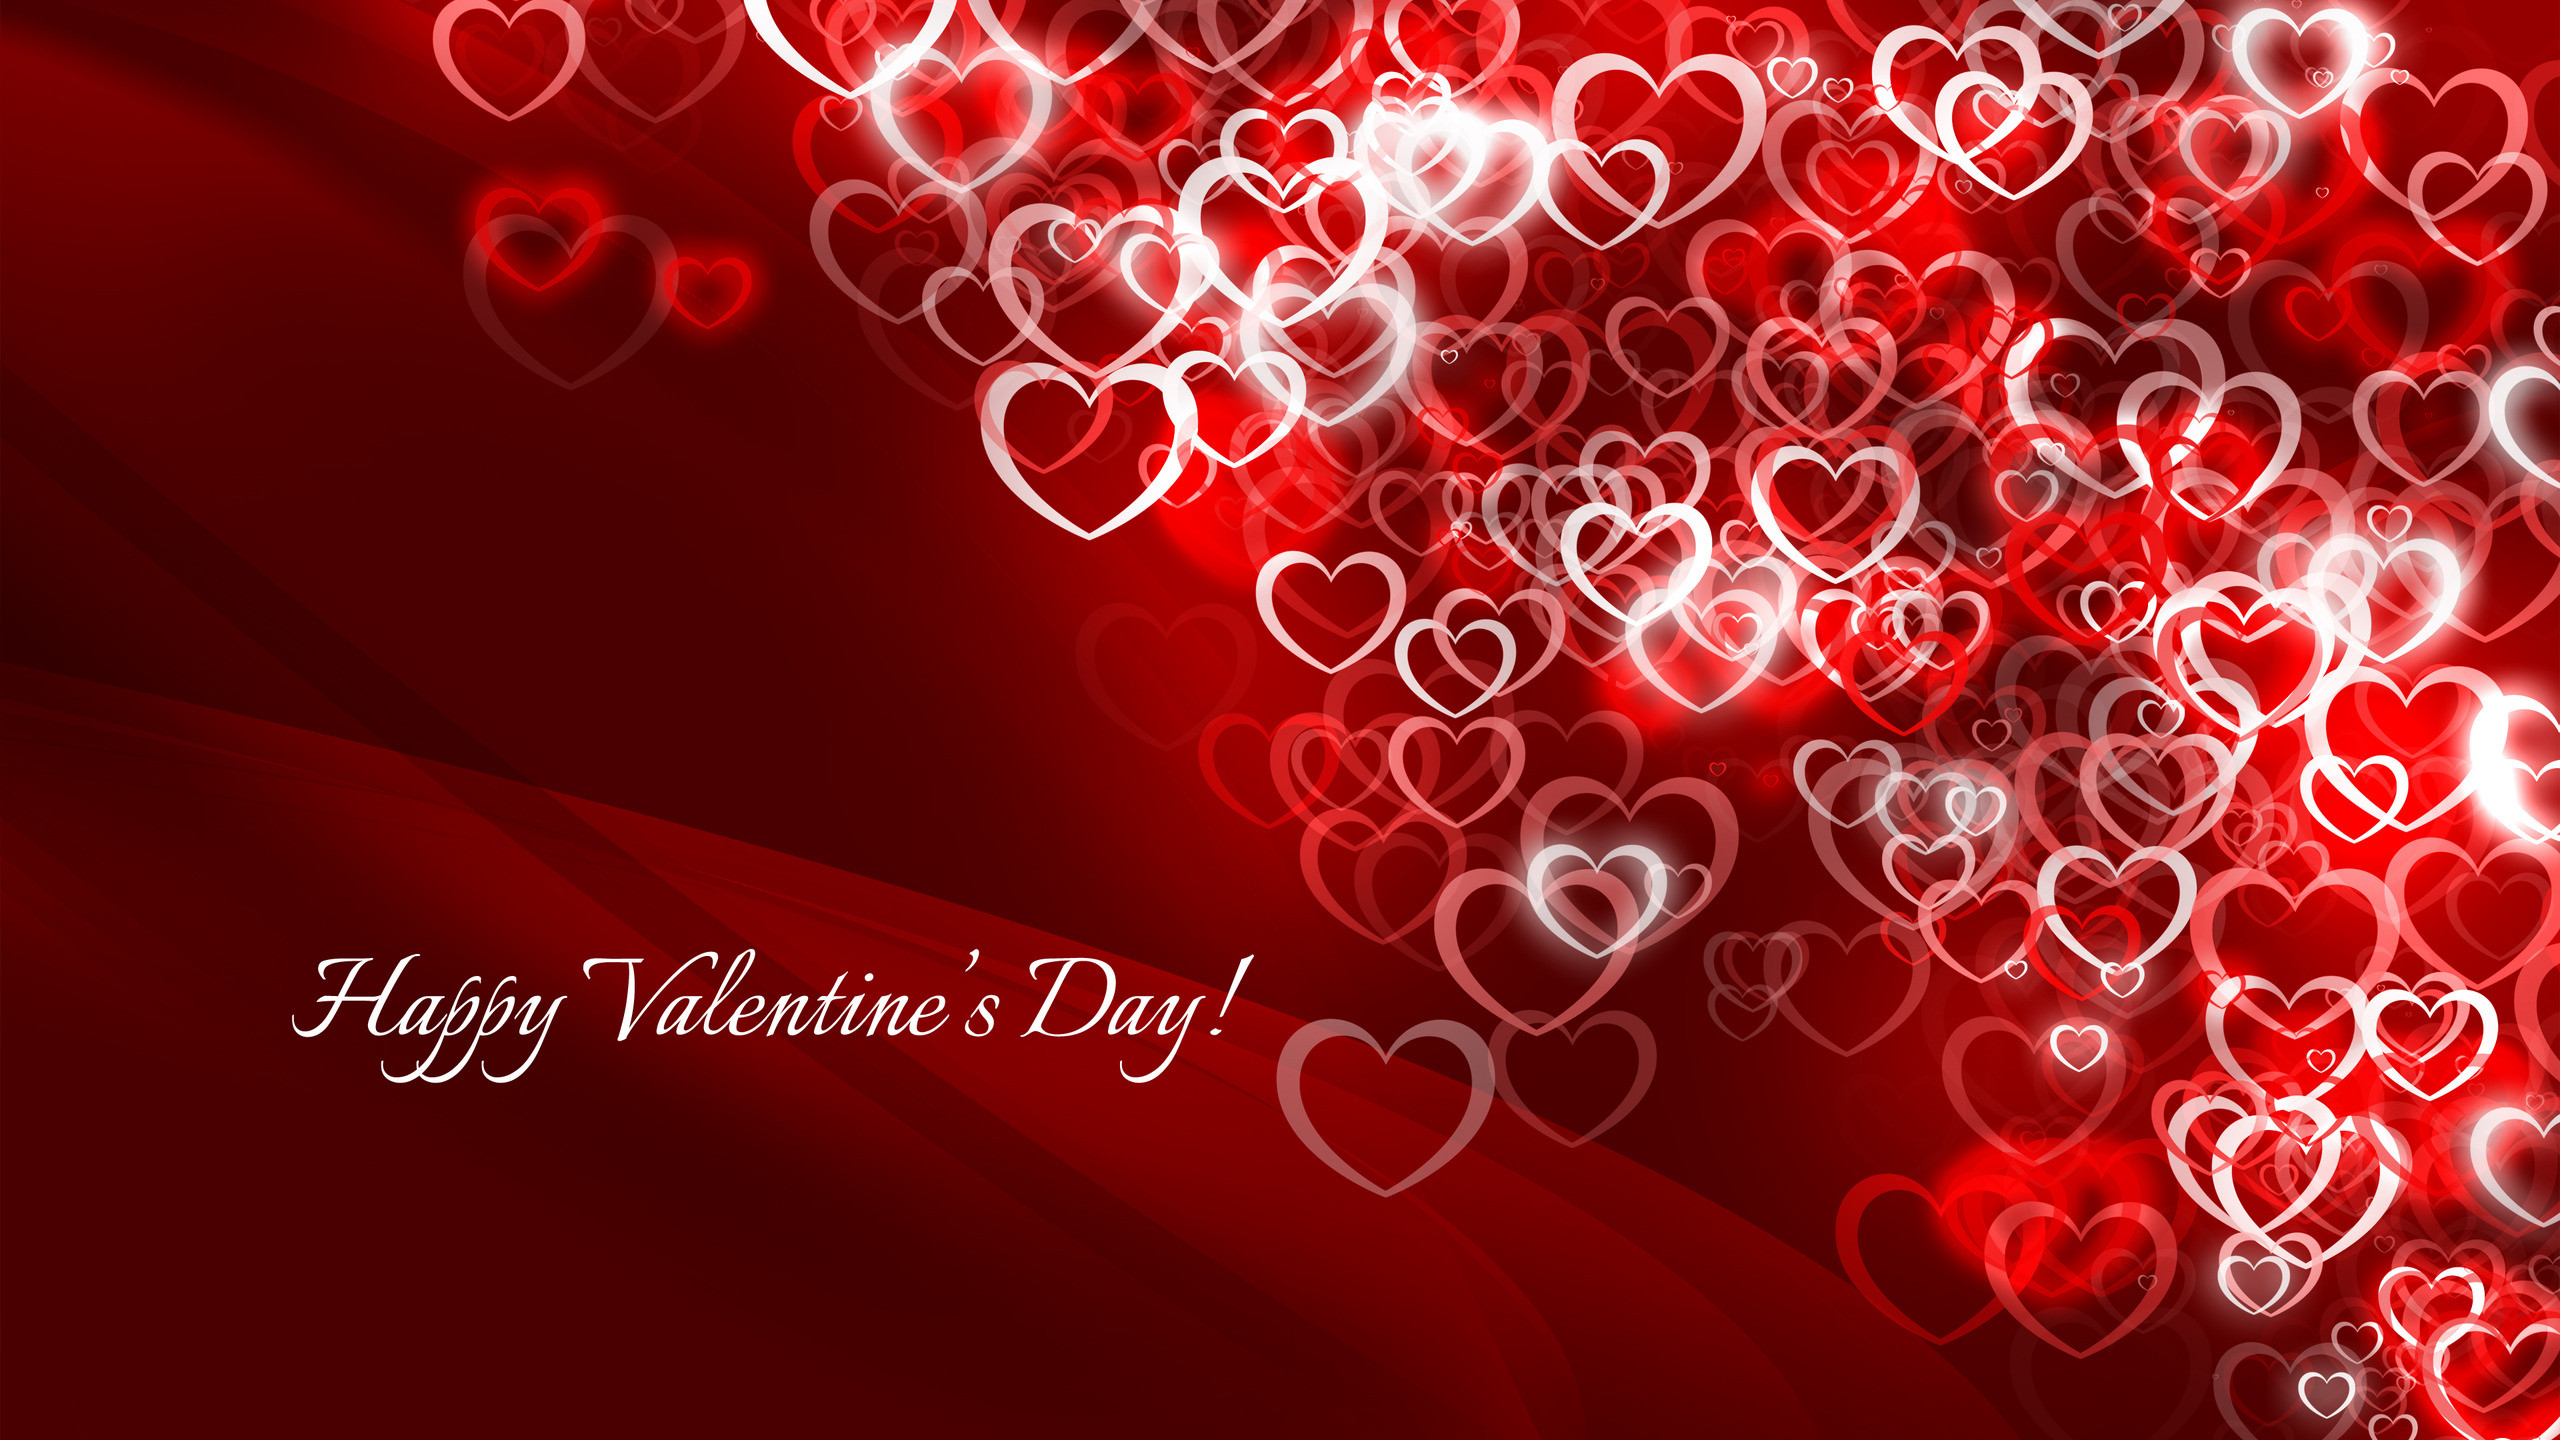 Valentines Day Desktop Wallpaper - NawPic